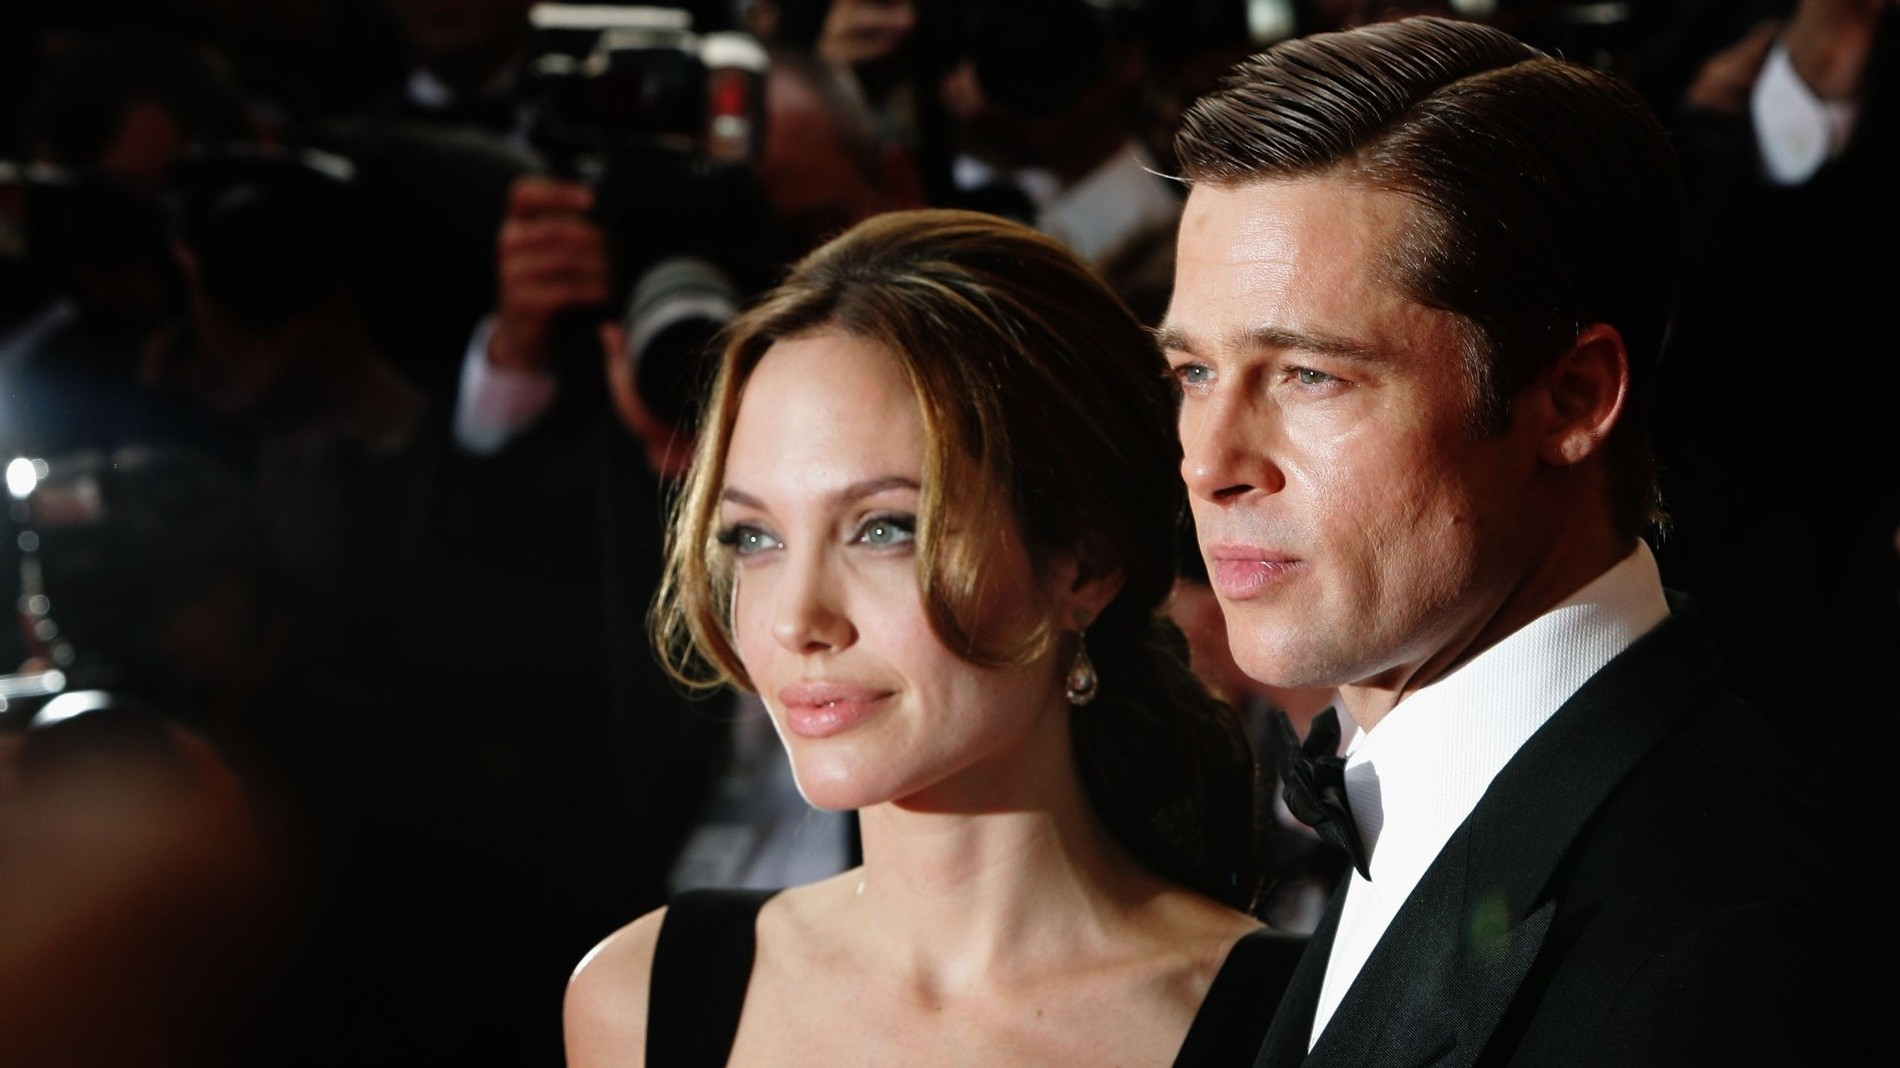 Анджелина Джоли и Брэд Питт
Фото: Getty Images